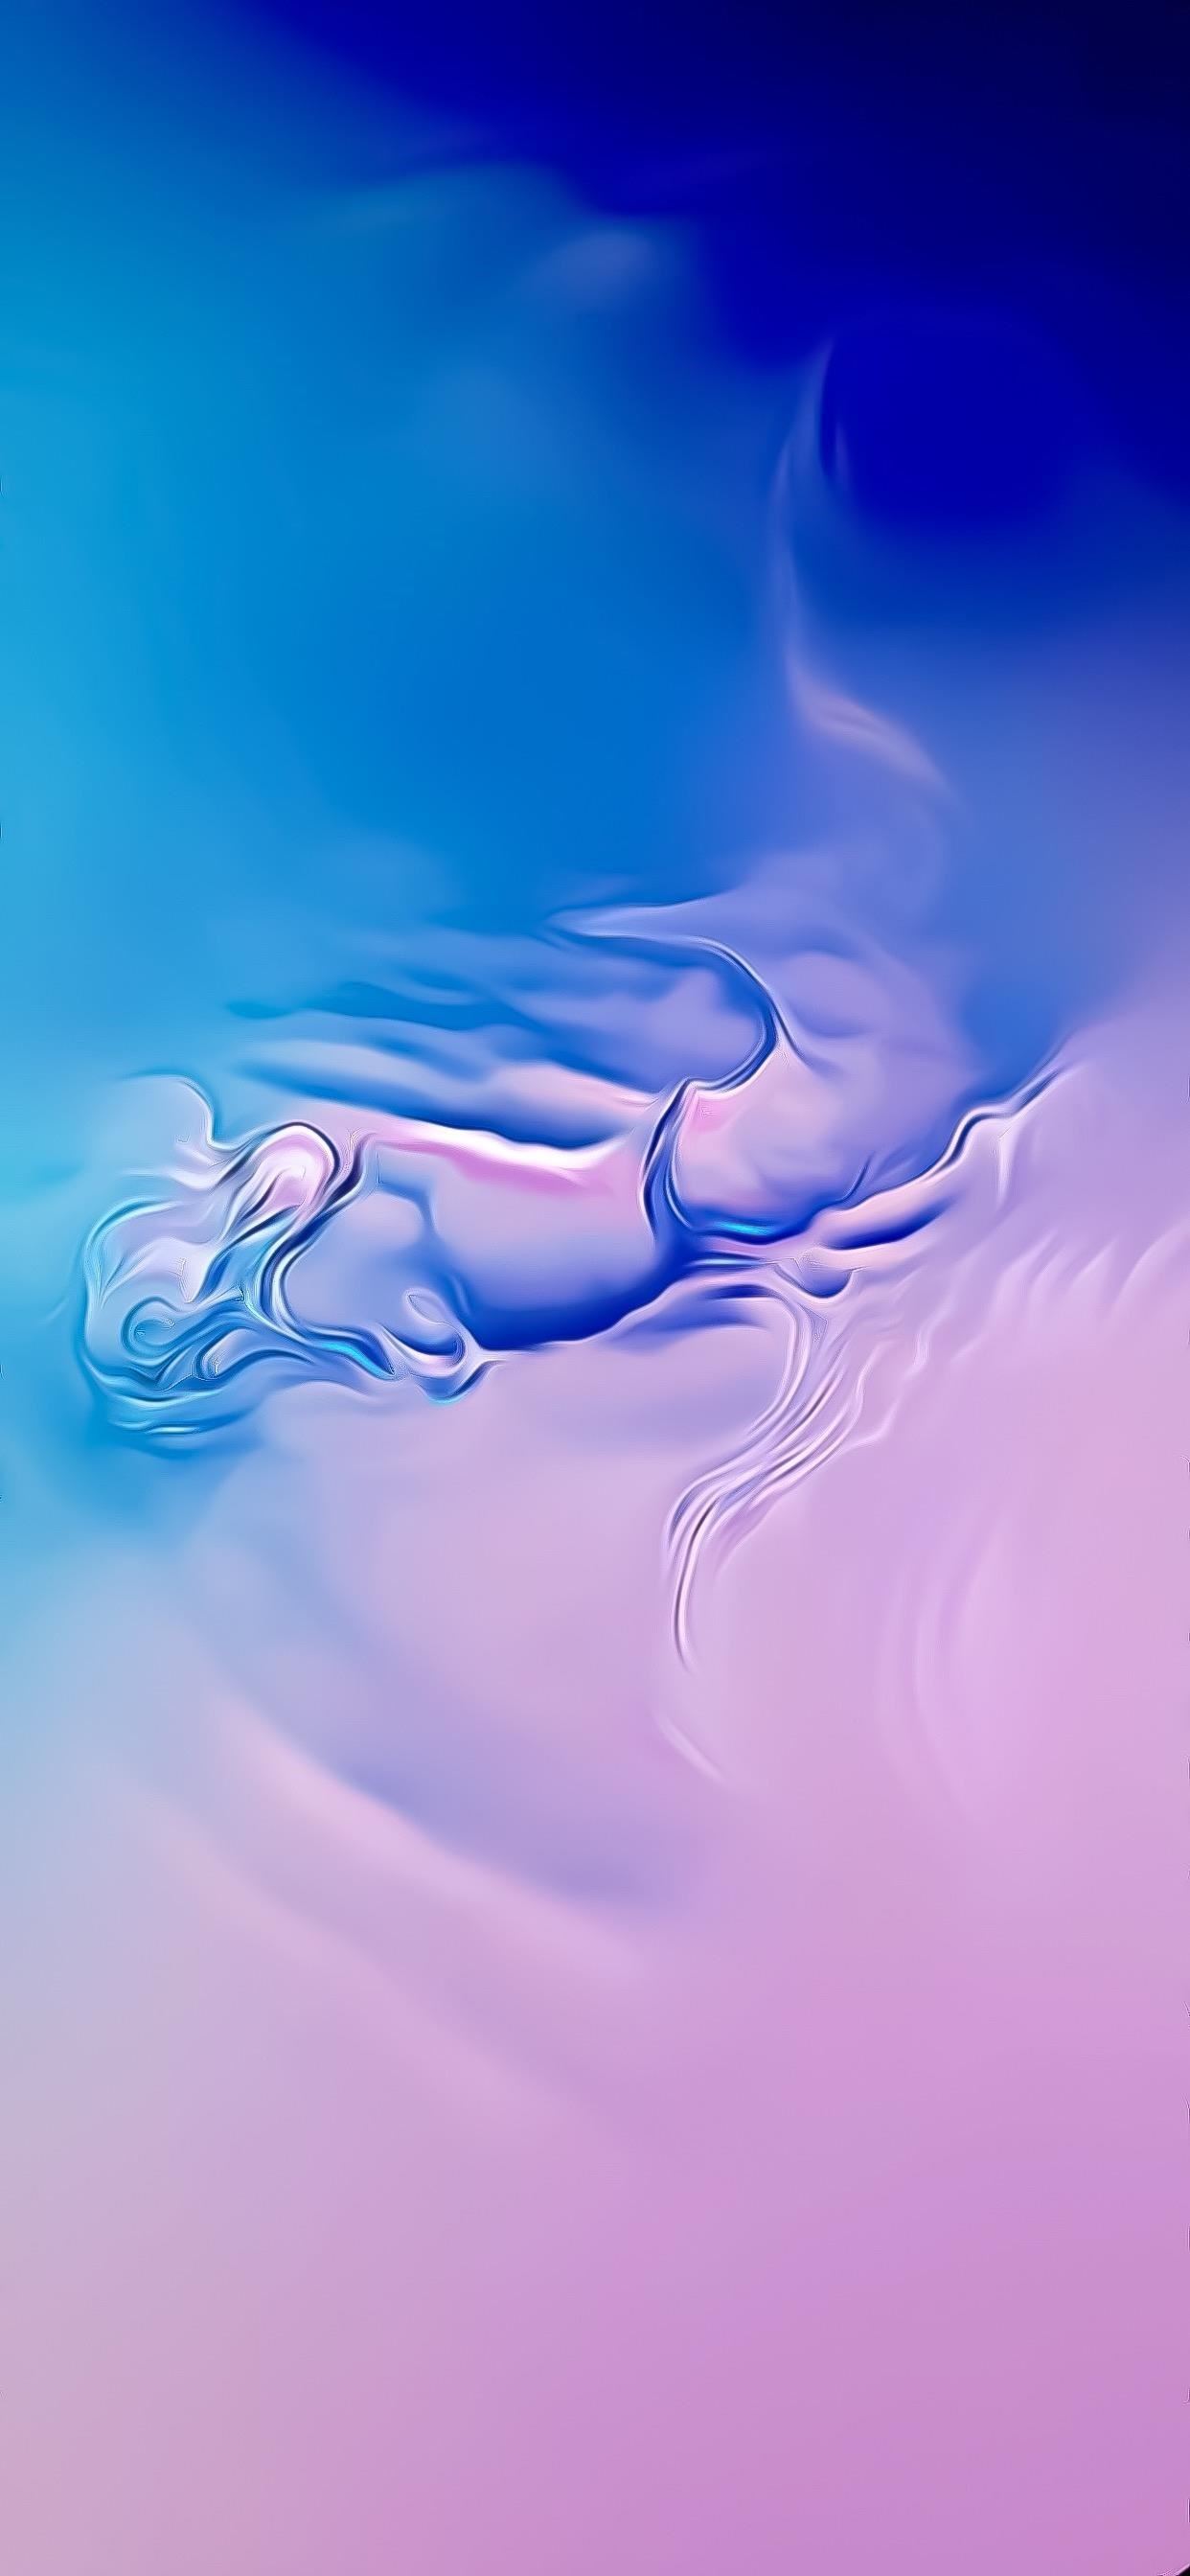 samsung nuevo fondo de pantalla,agua,azul,cielo,líquido,púrpura